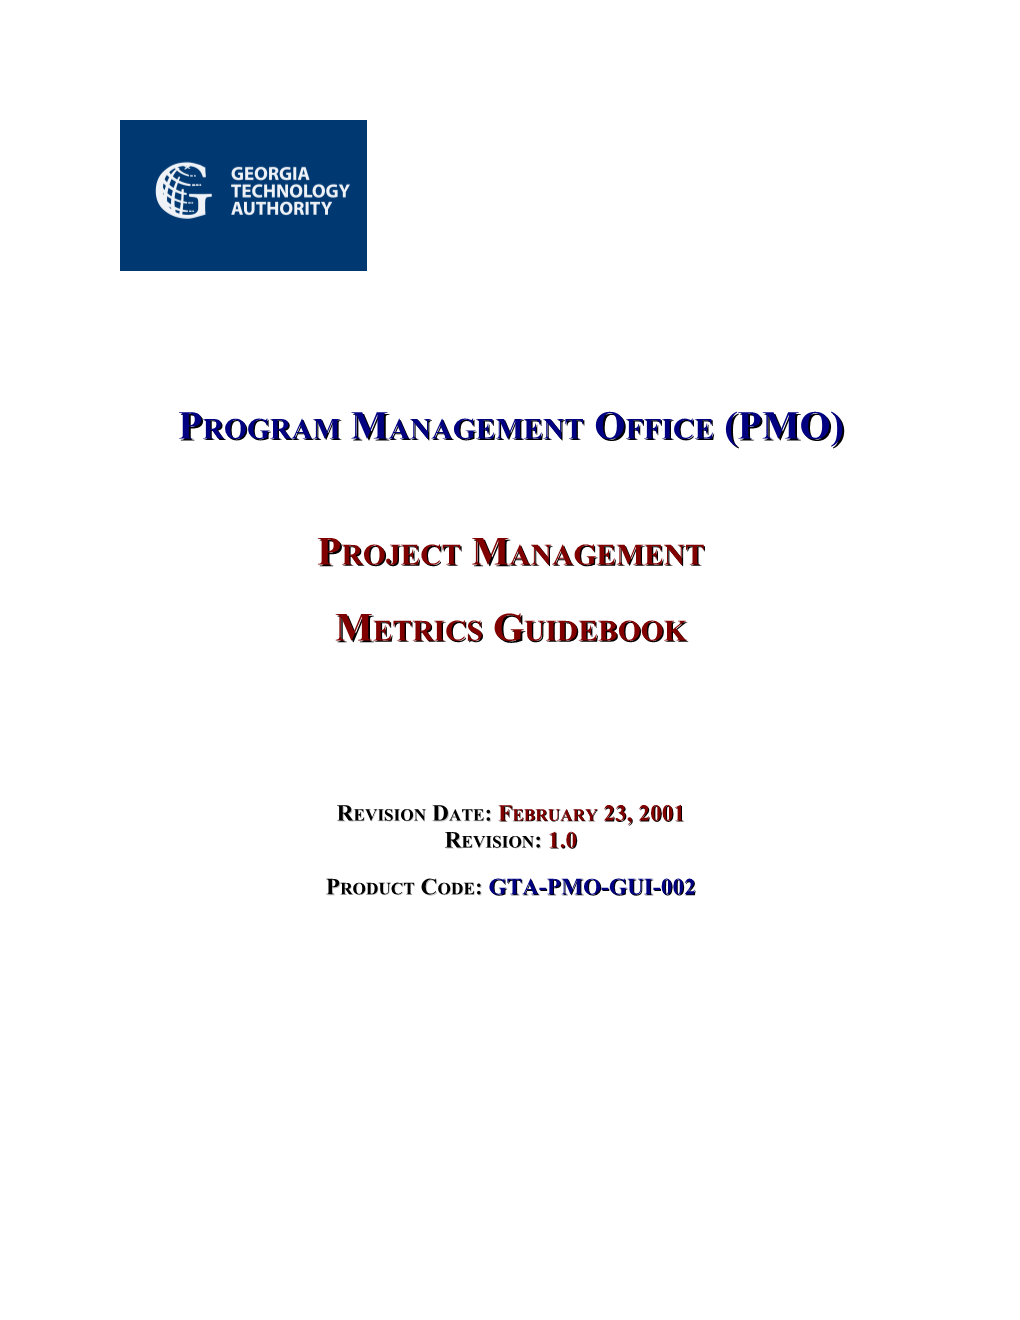 Project Management Metrics Guidebook